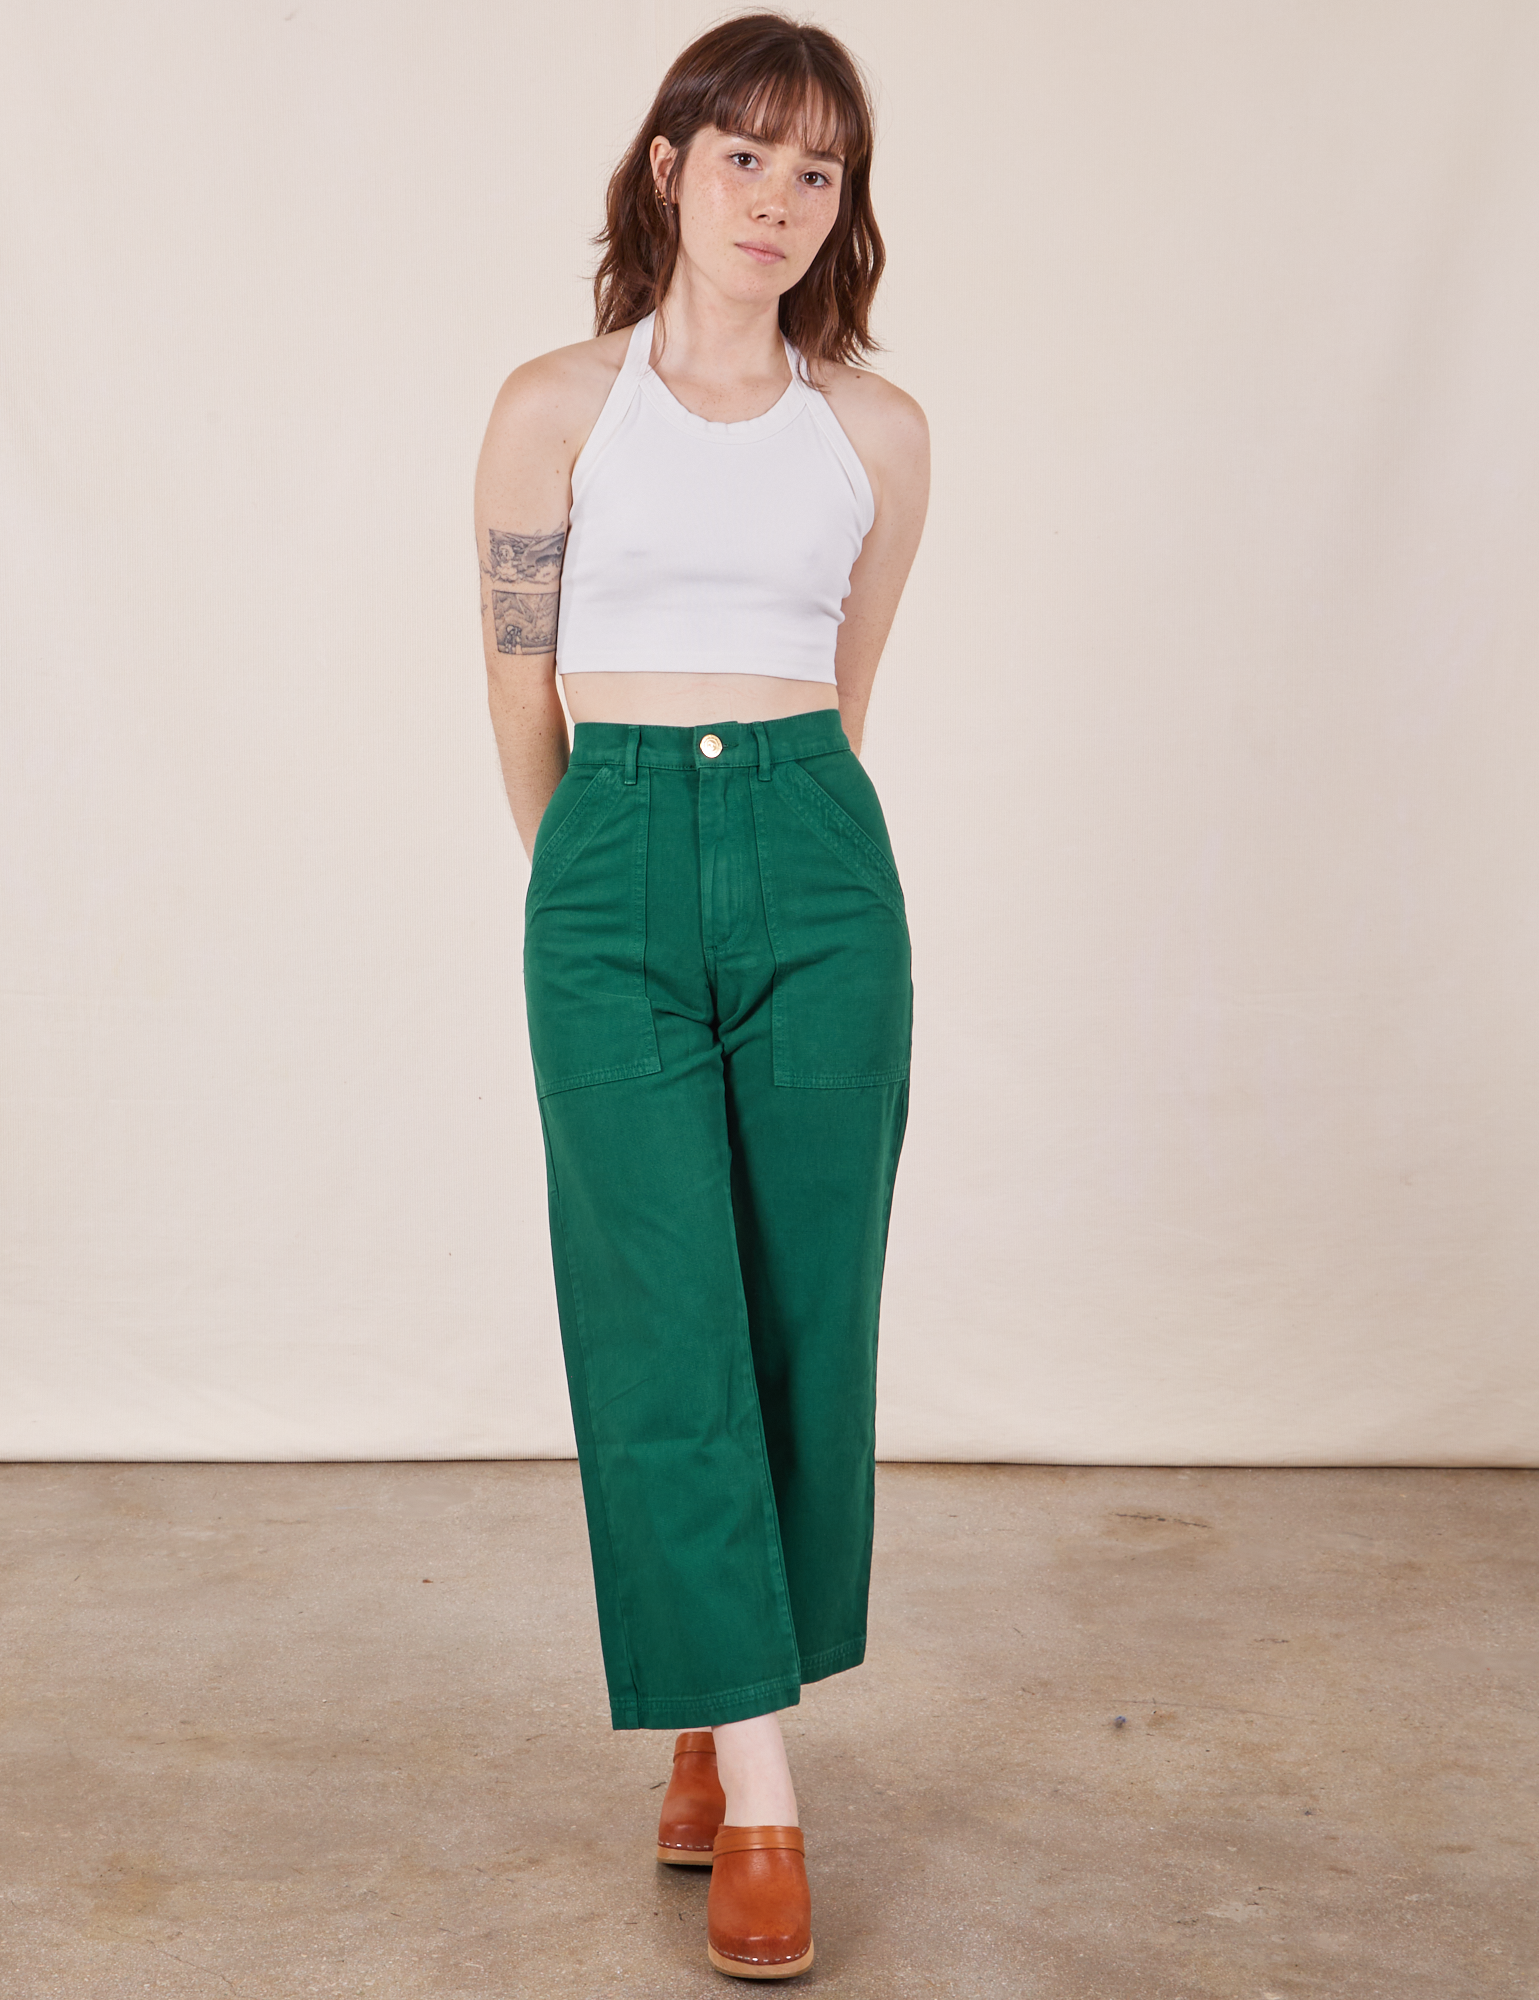 Hana is wearing Work Pants in Hunter Green and Halter Top in vintage tee off-white